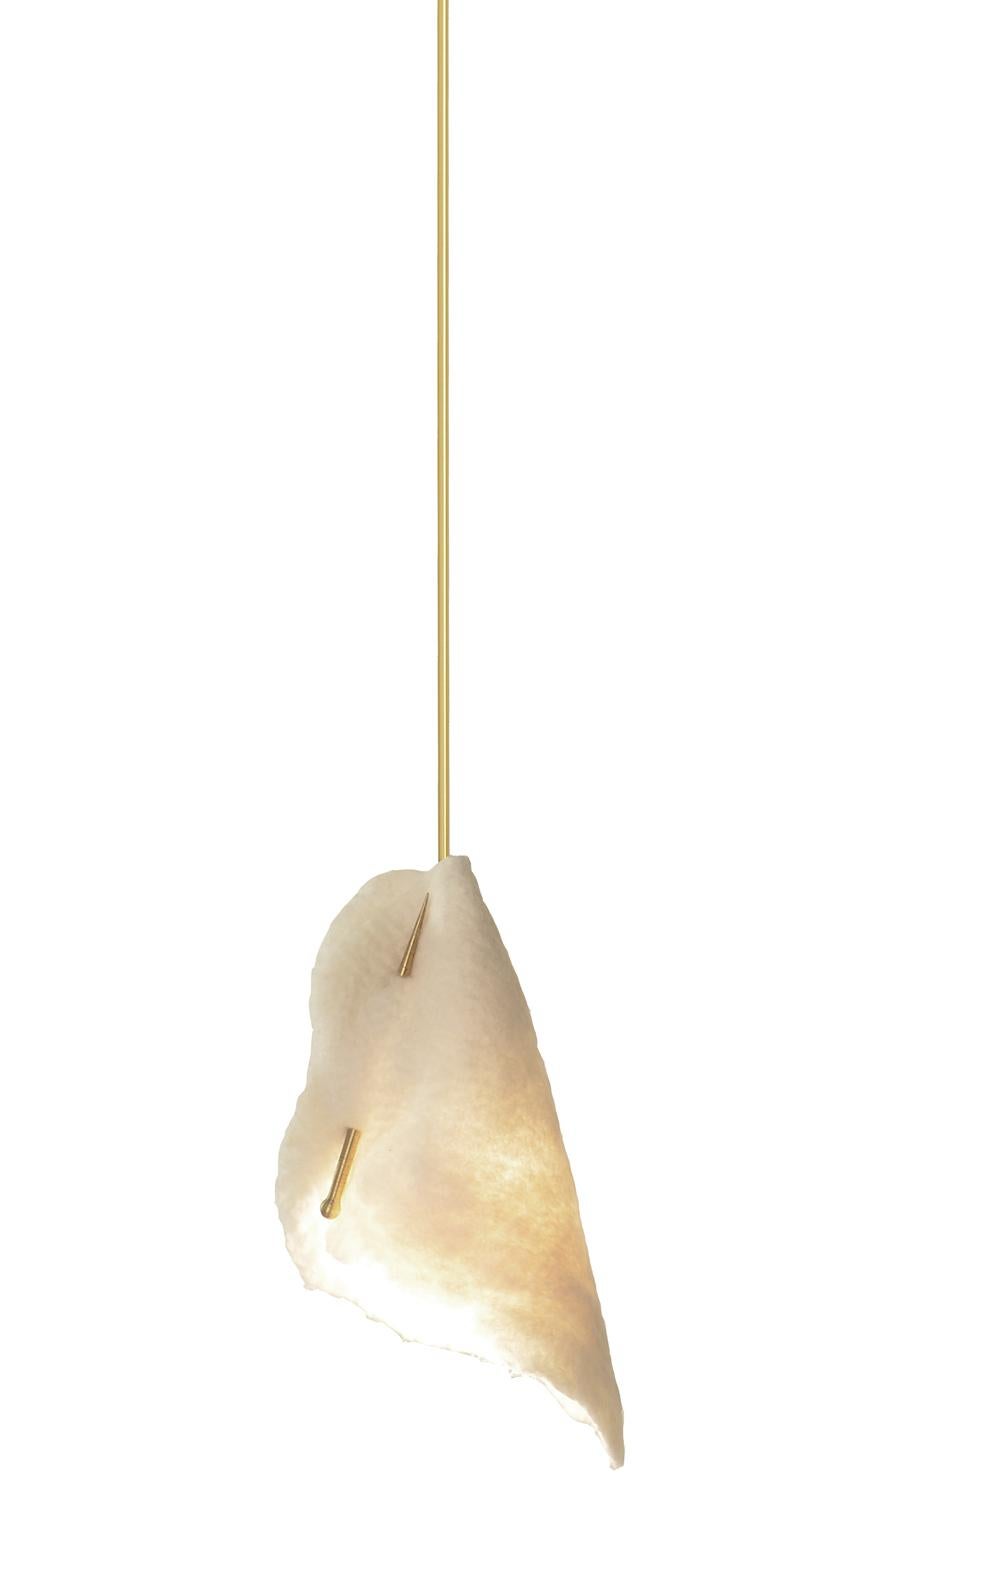 Organic Modern Lâ-mpada Envelope P size - Brazilian contemporary pendant lamp